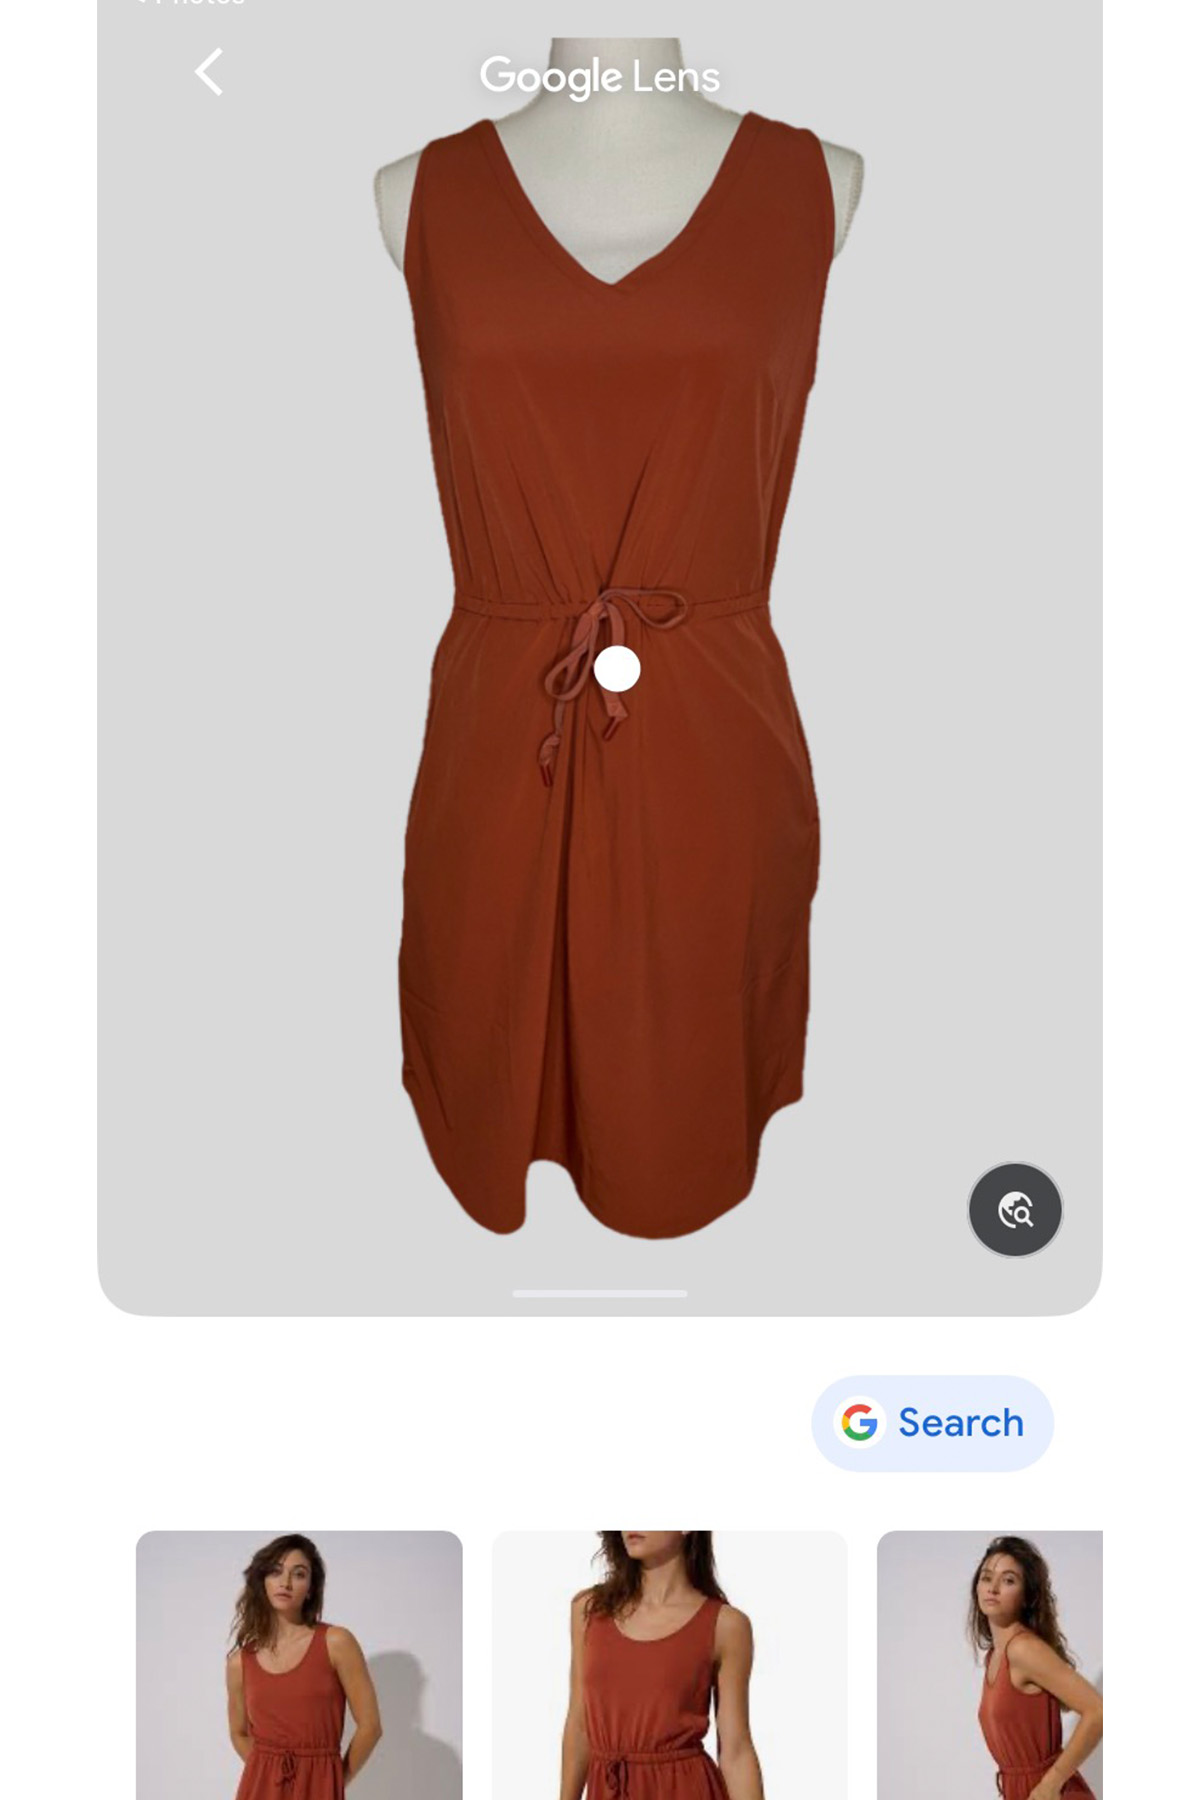 screenshot of a google lens search for an eddie bauer dress.